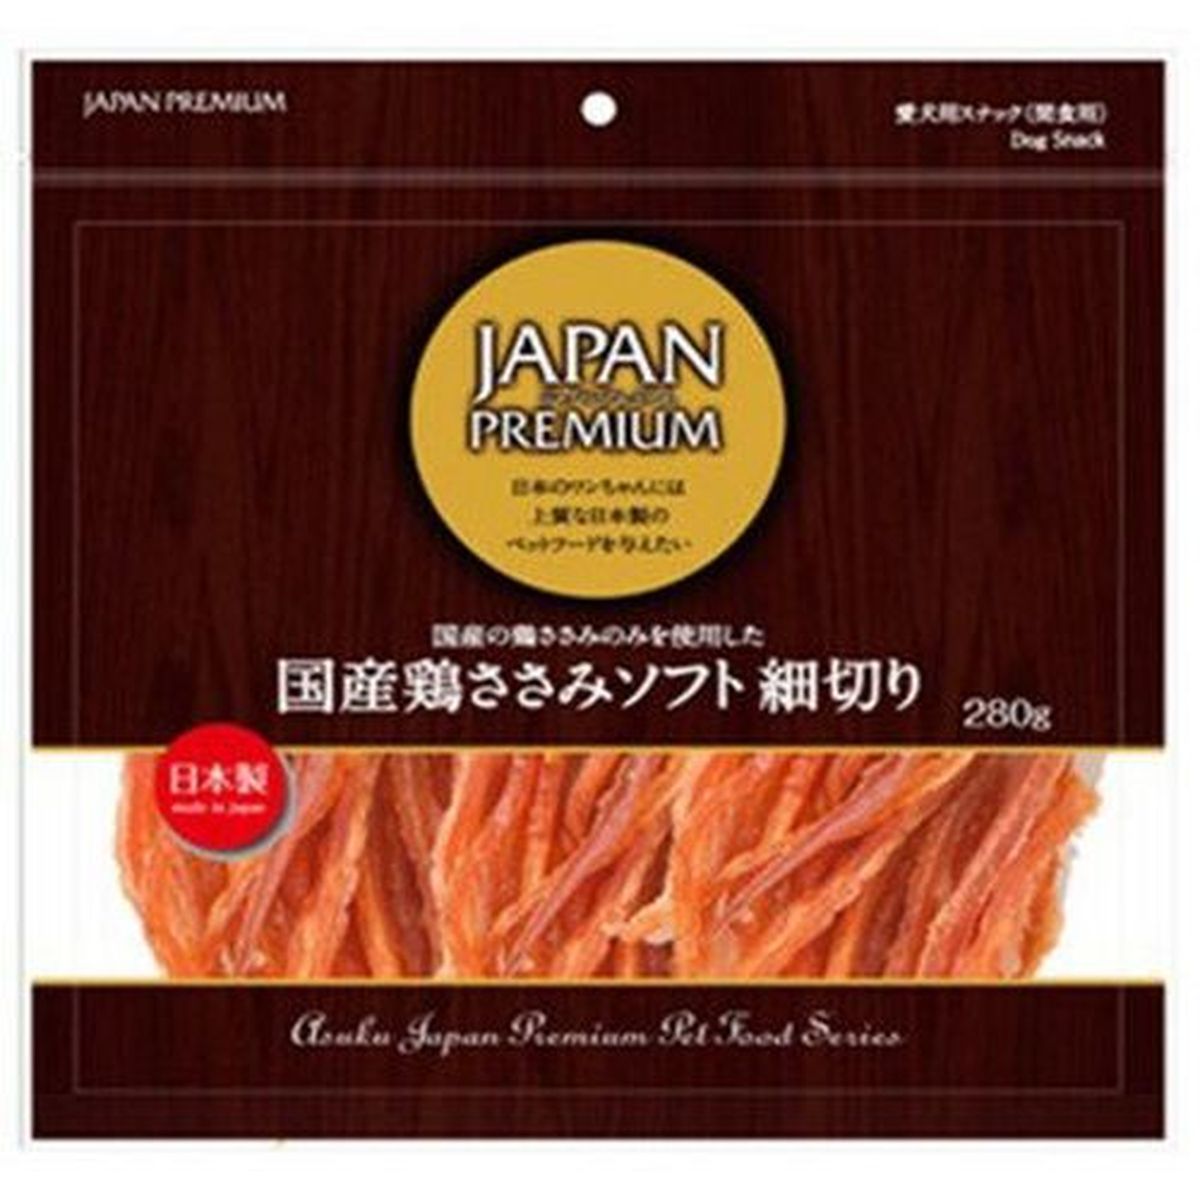 JAPAN PREMIUM 国産鶏ササミソフト細切リ 280g×24